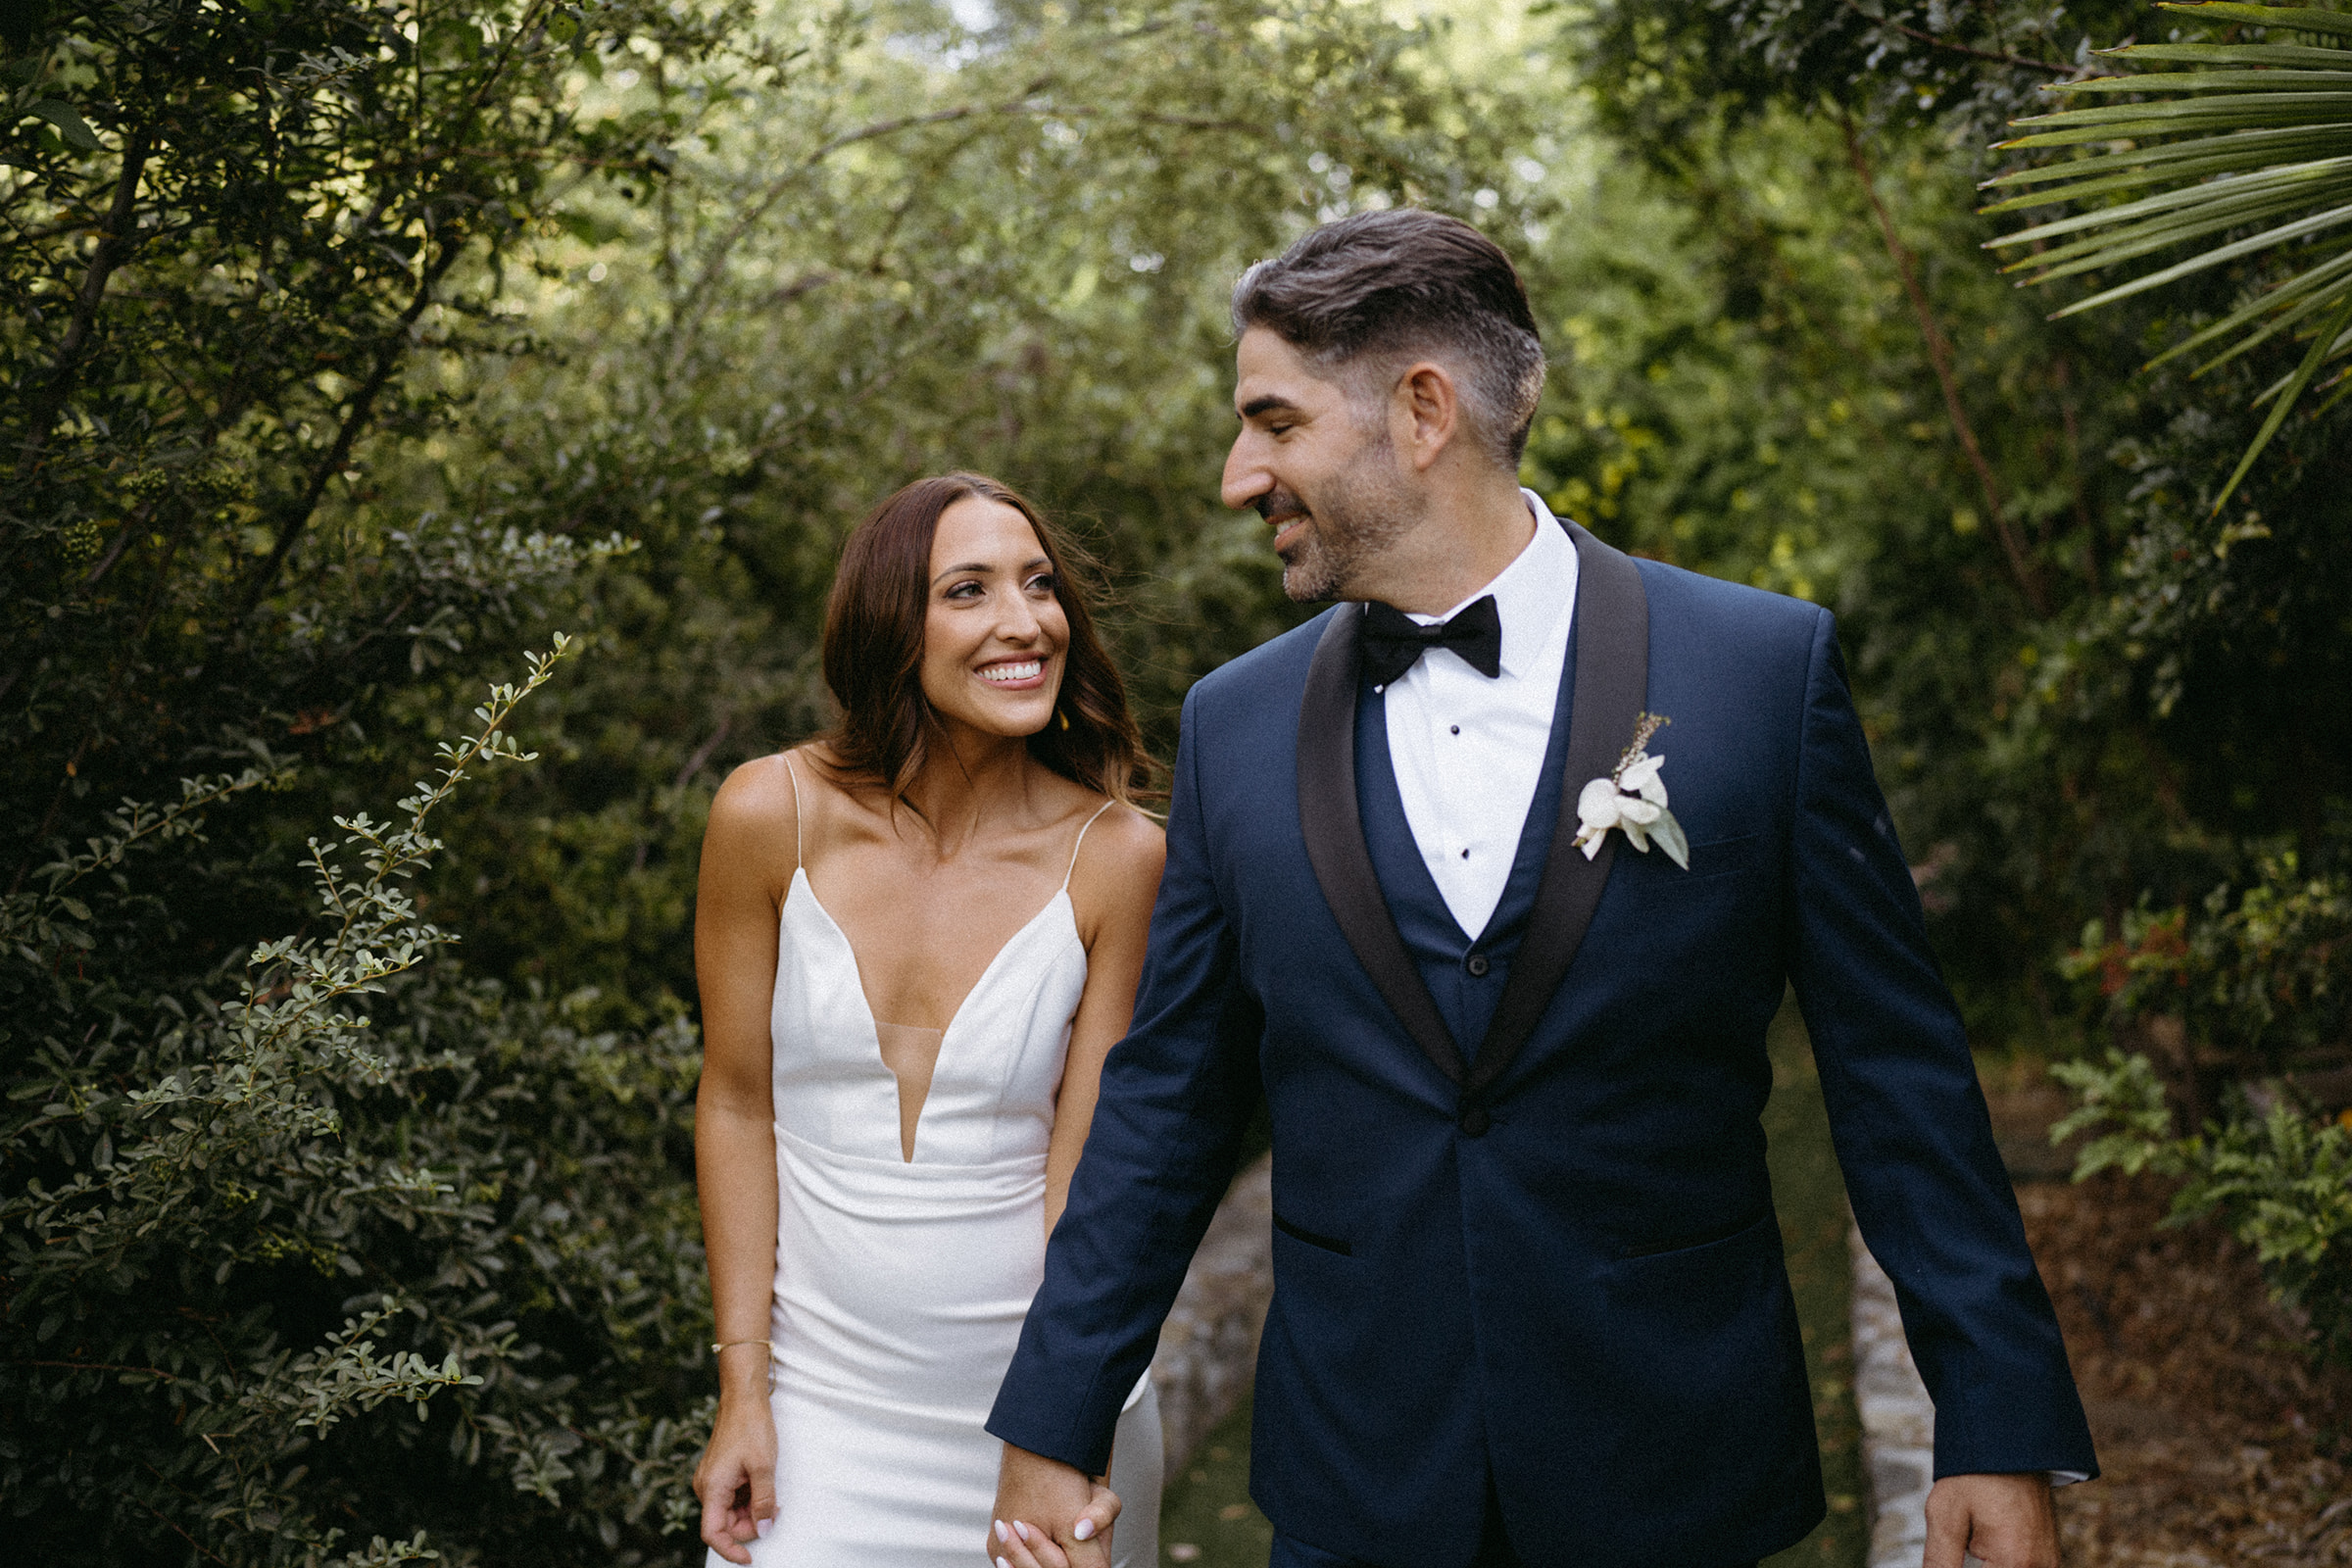 Jessica & David get married in Southern California at Tivoli Italian Villa in sunny Fallbrook California